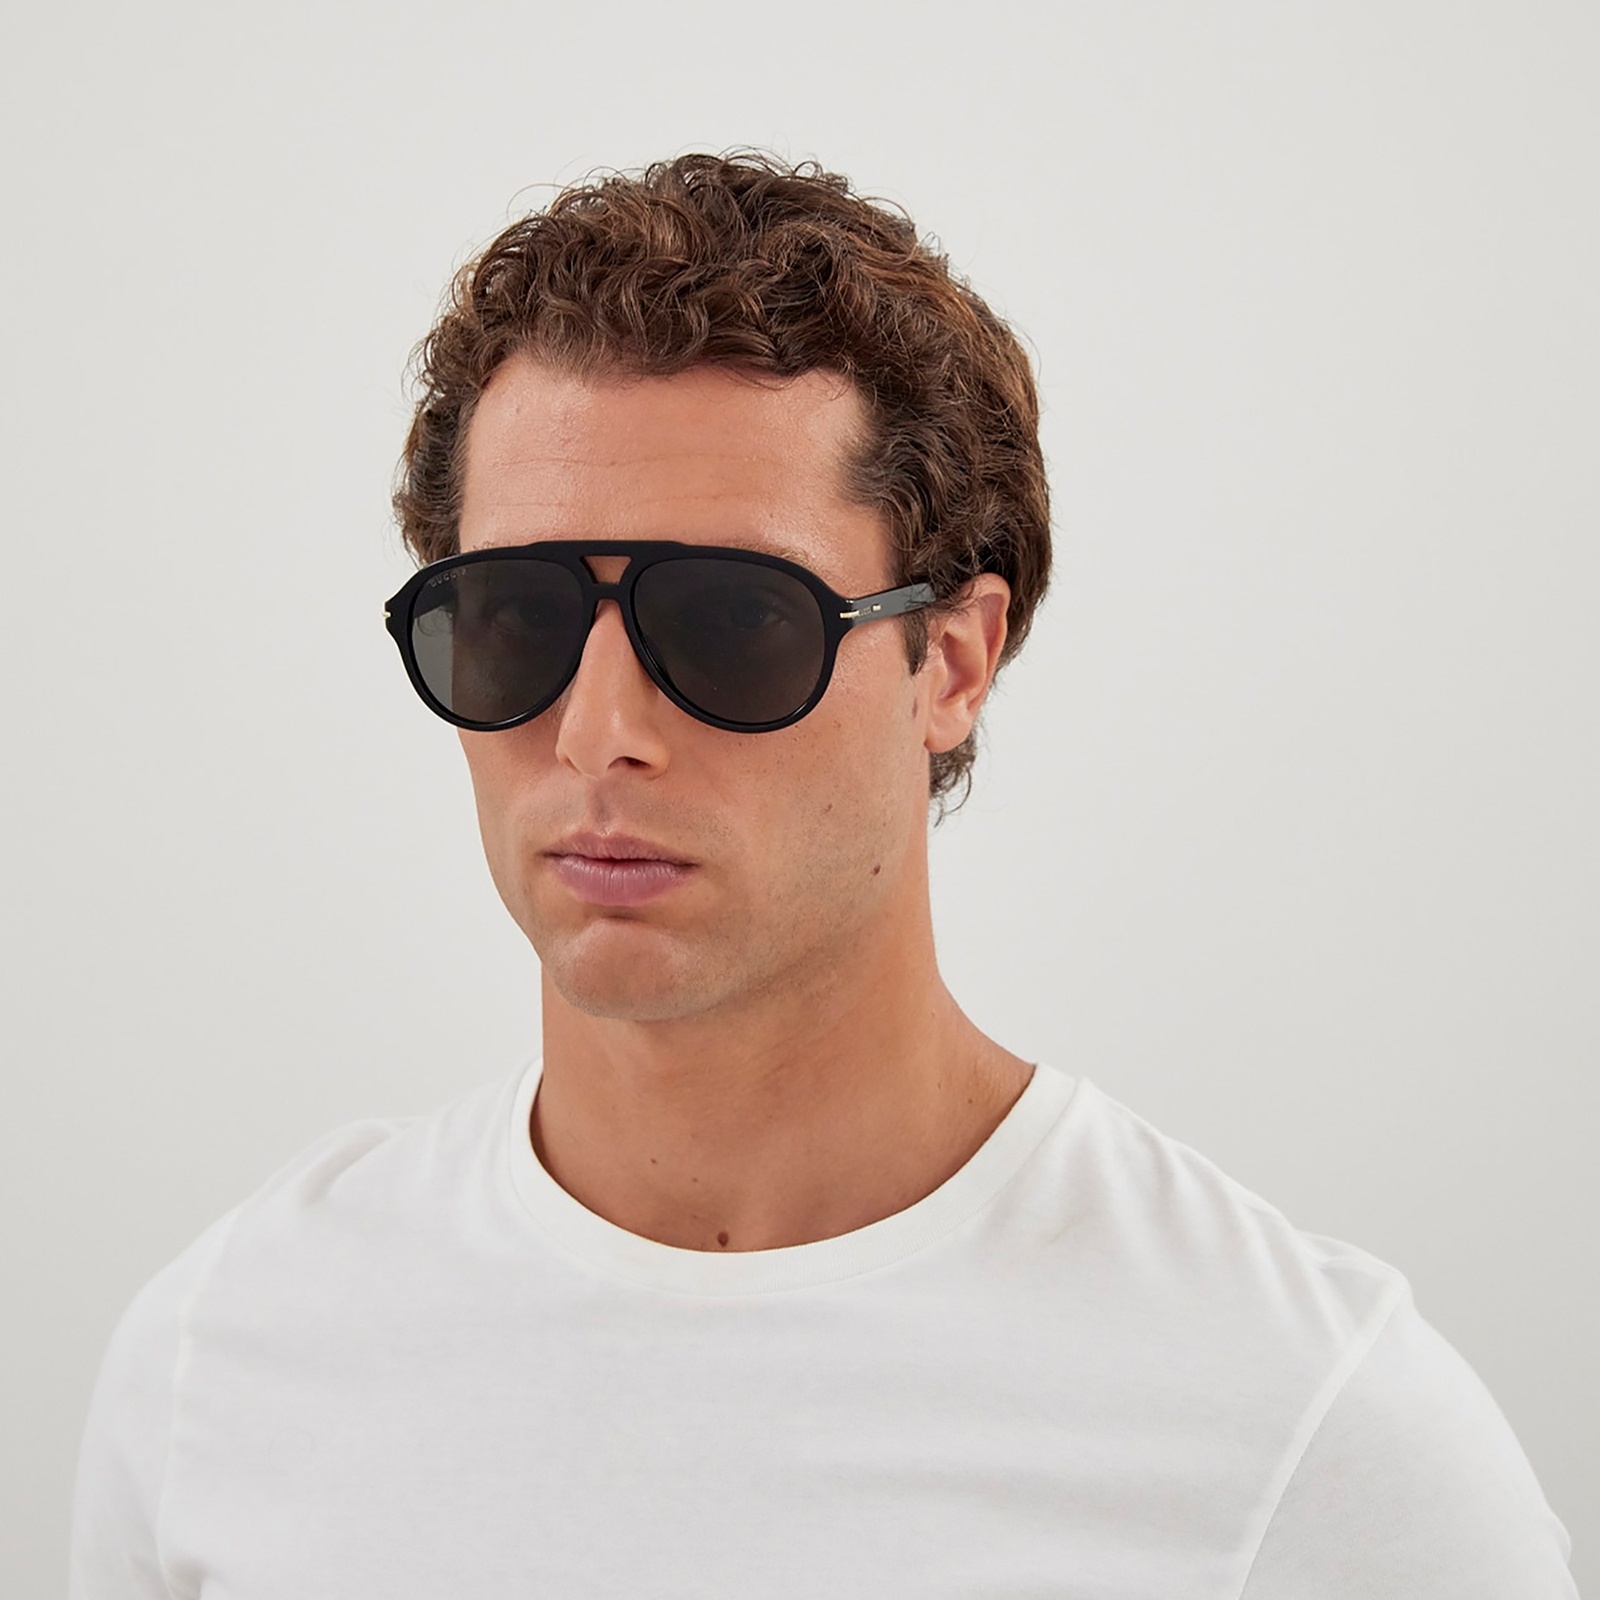 Gucci Men's Recycled Acetate Aviator Sunglasses - Black/Grey - 2